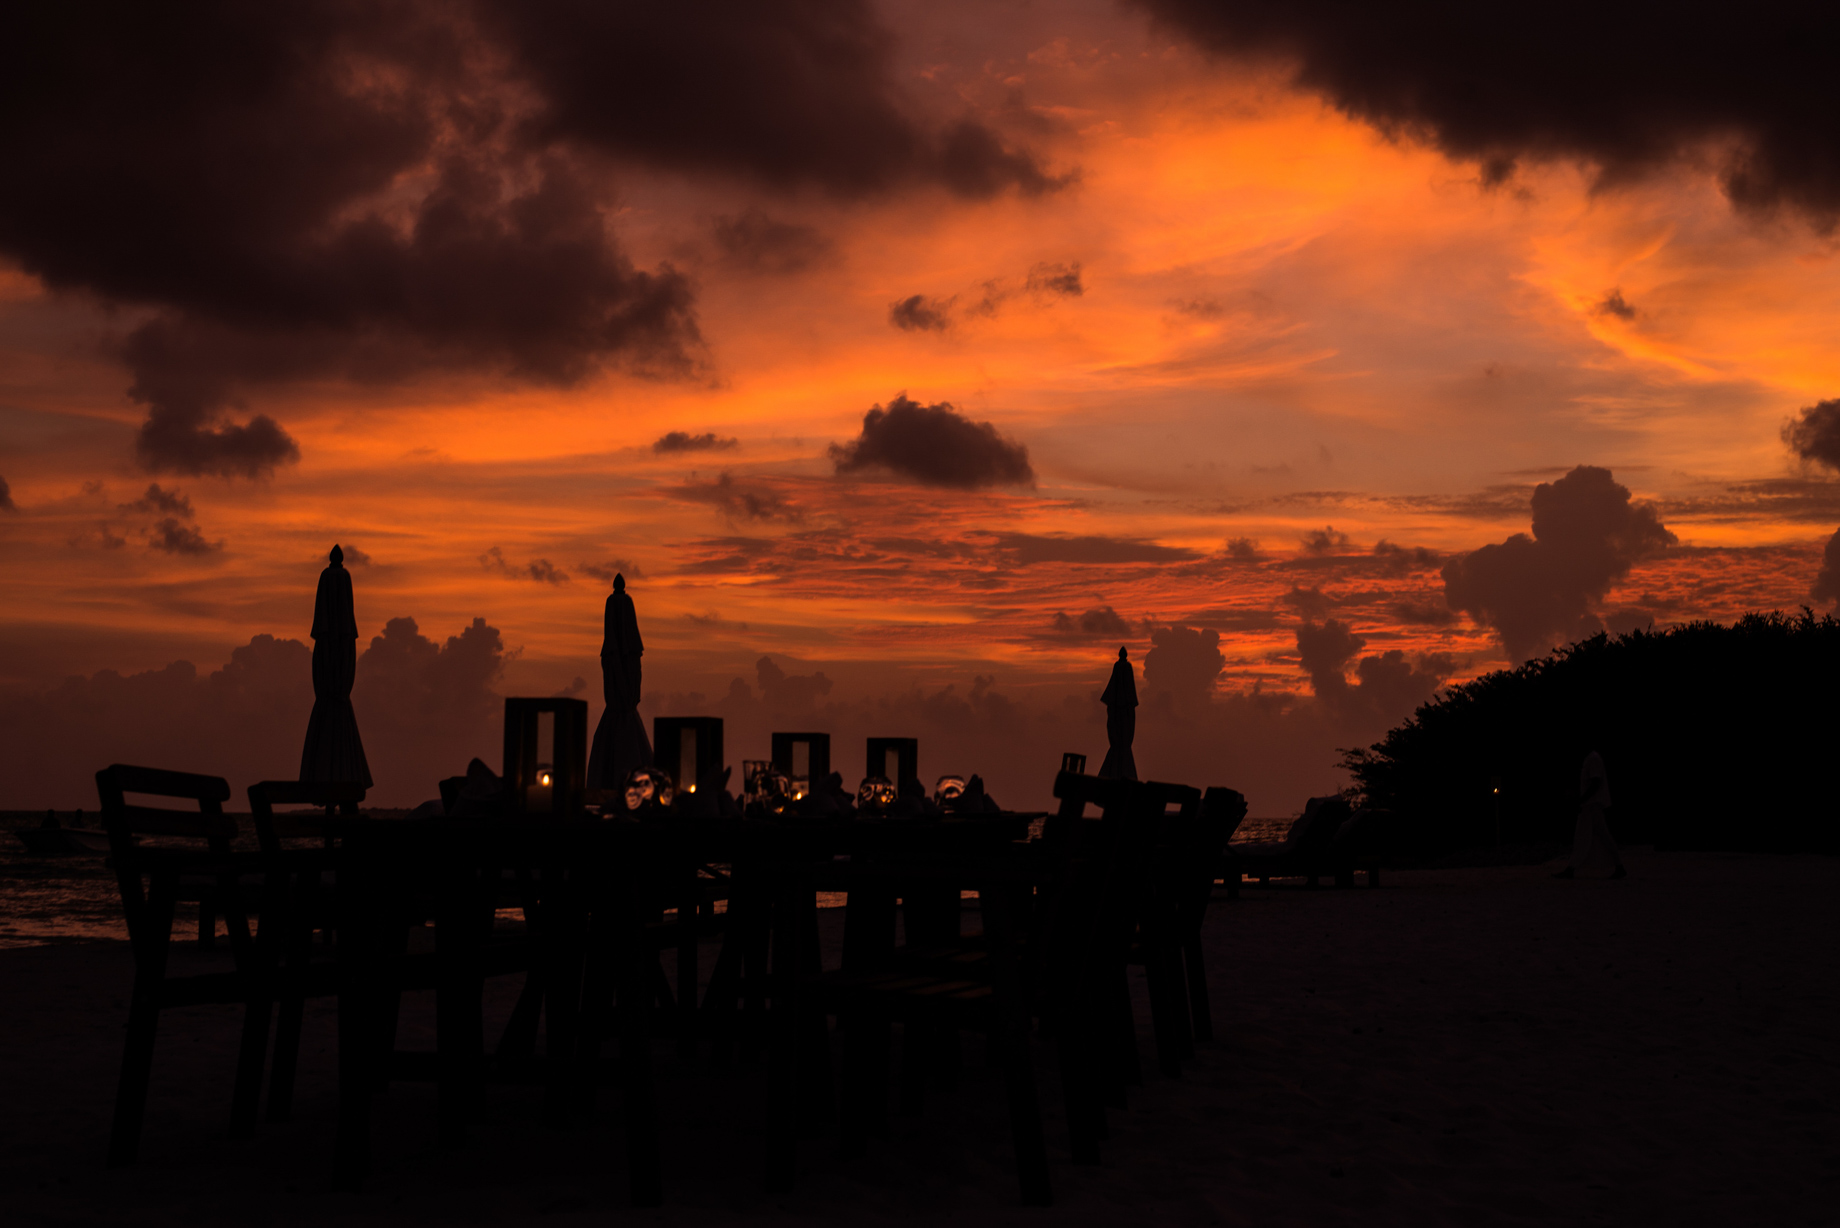 Soneva Jani Resort – Noonu Atoll, Medhufaru, Maldives – Private Island Beach Dining Sunset